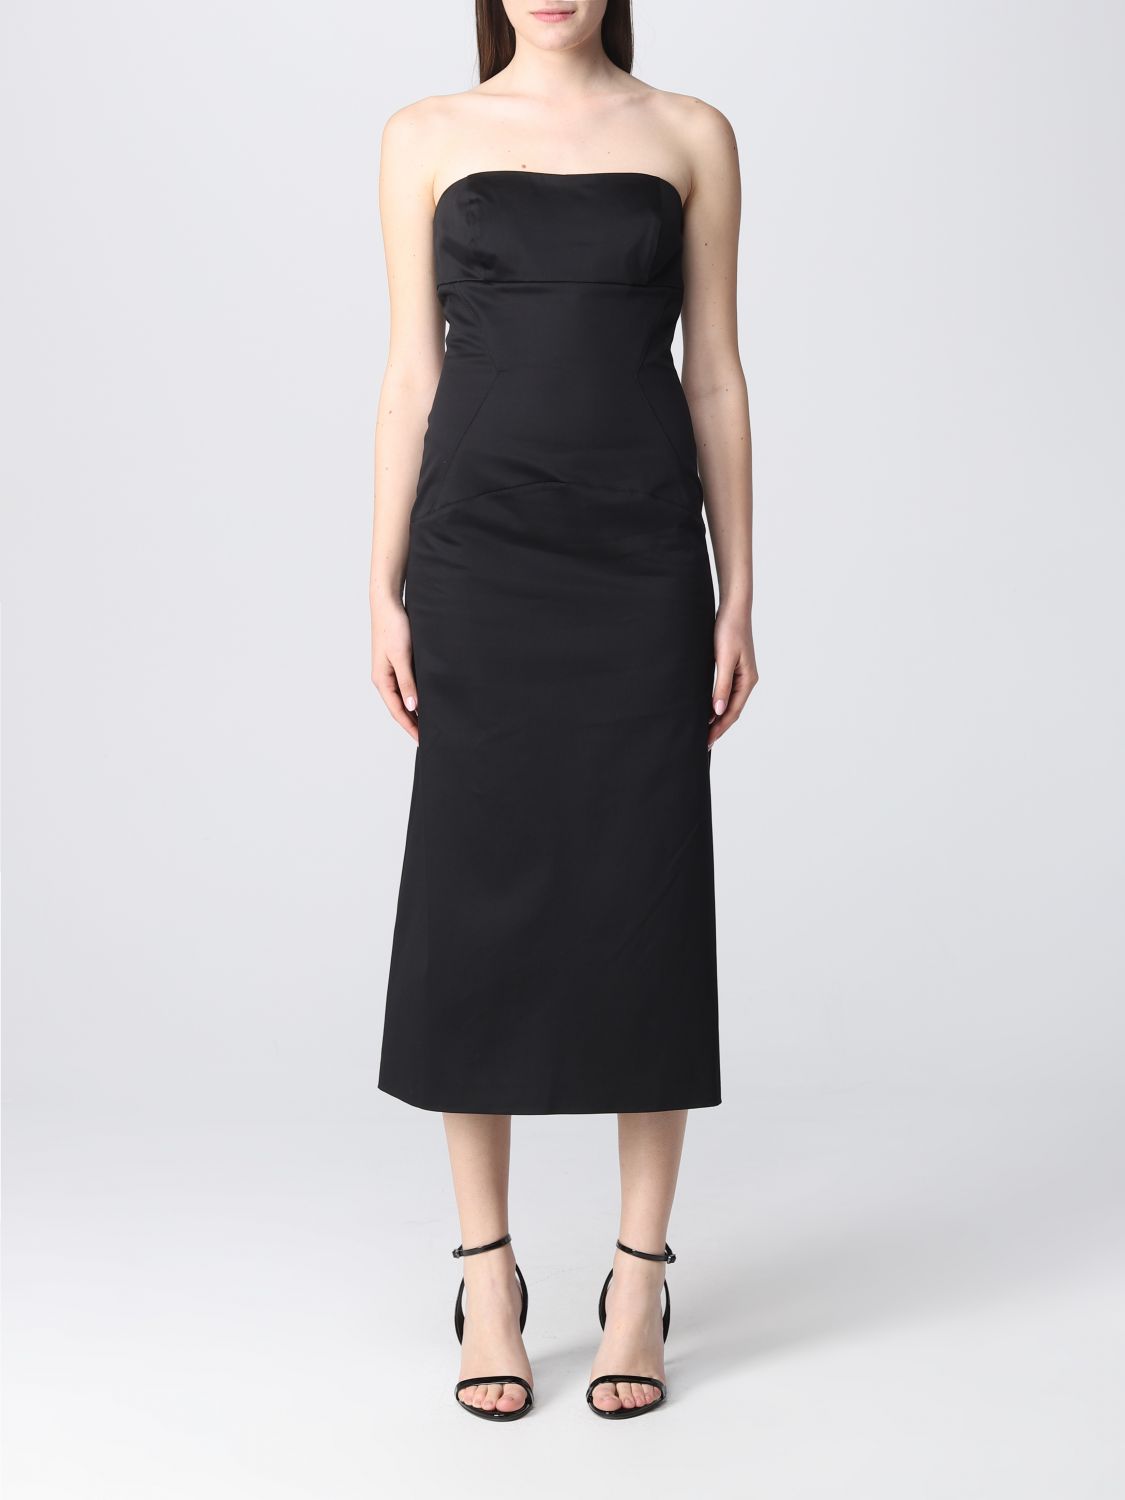 GRIFONI: dress for woman - Black | Grifoni dress 27013120 online on ...